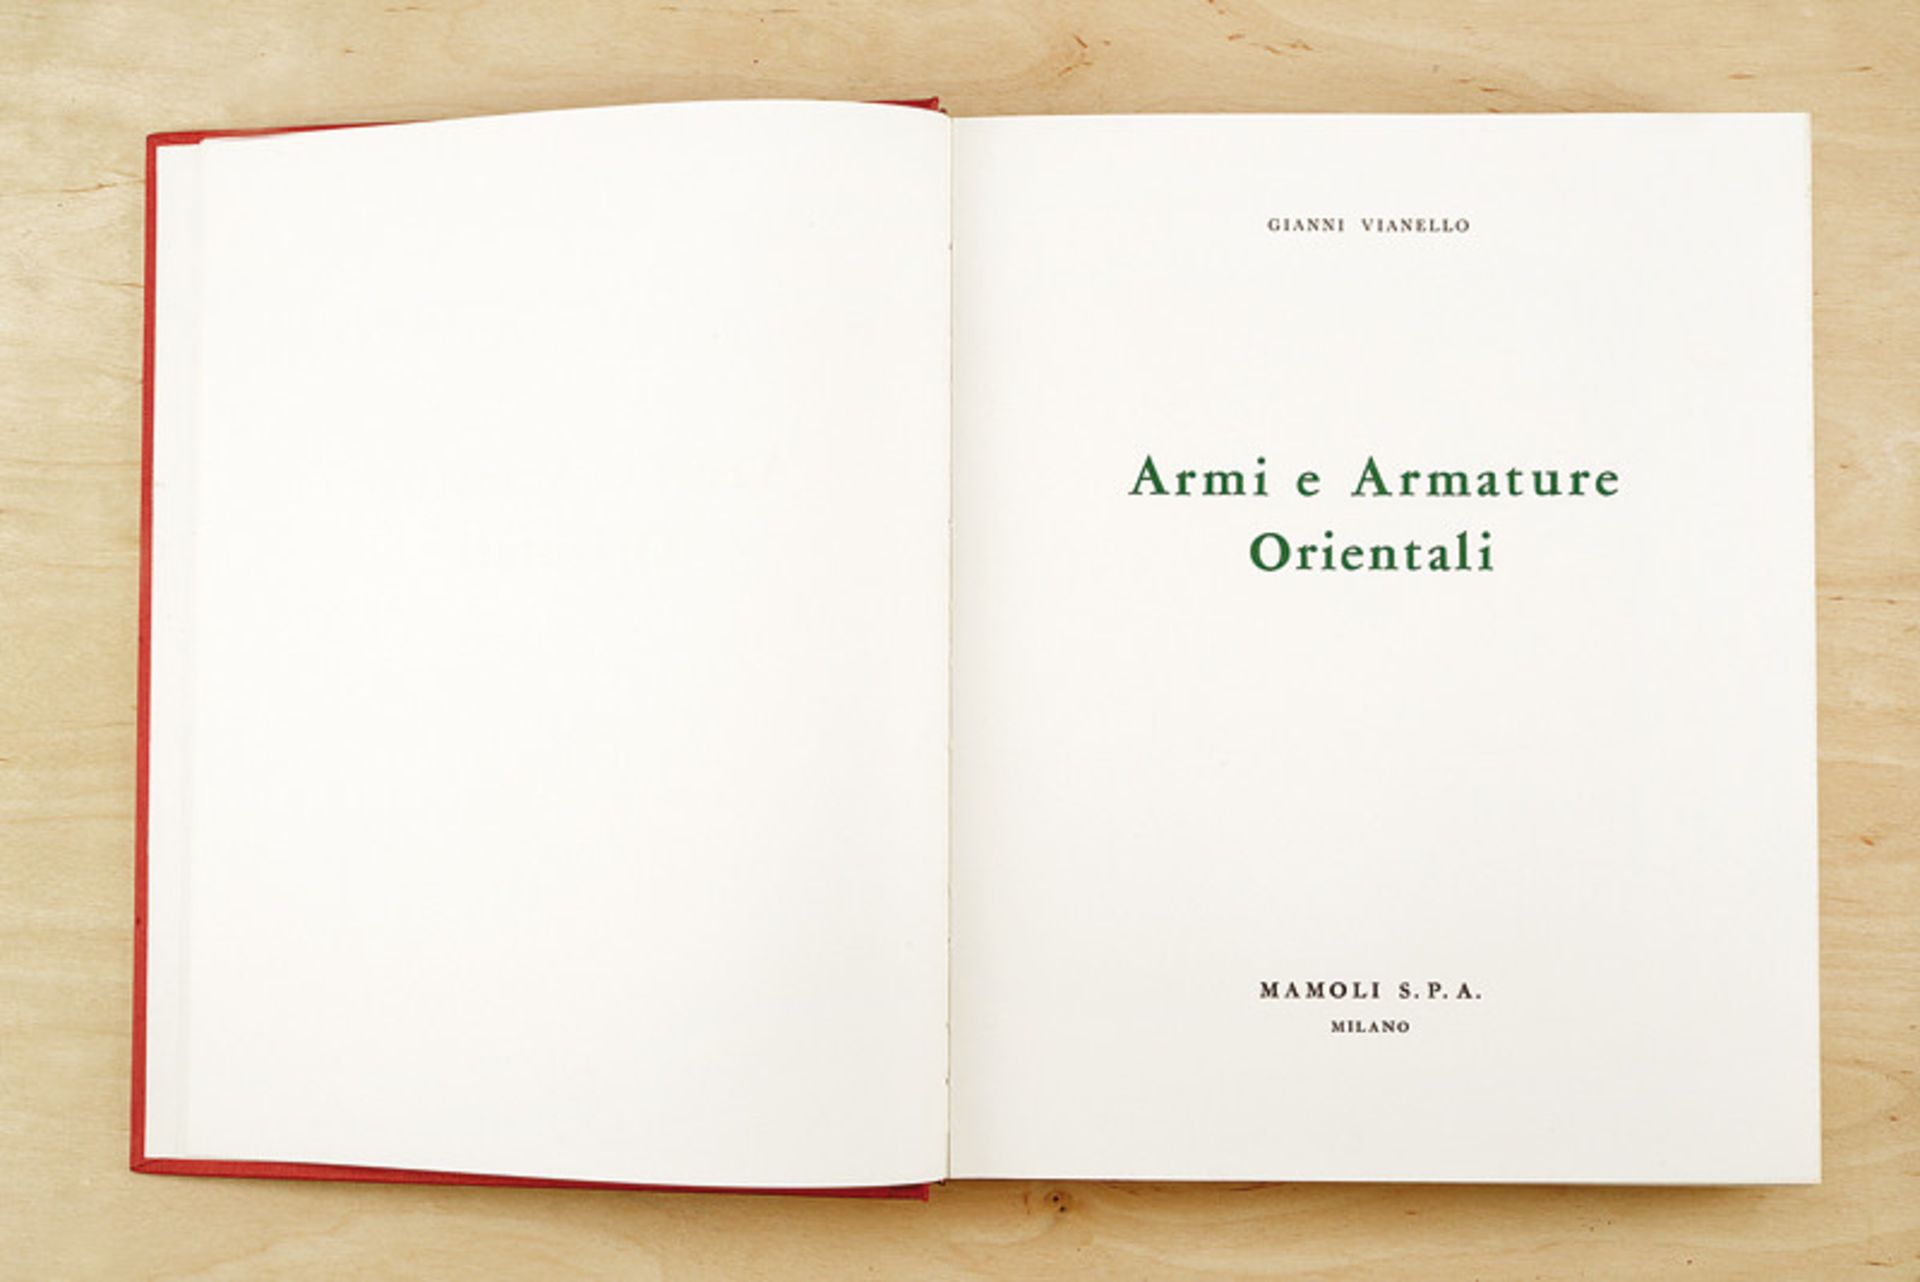 Vianello, Gianni dating: third quarter of the 20th Century provenance: Italy "Armi e Armature - Image 3 of 4